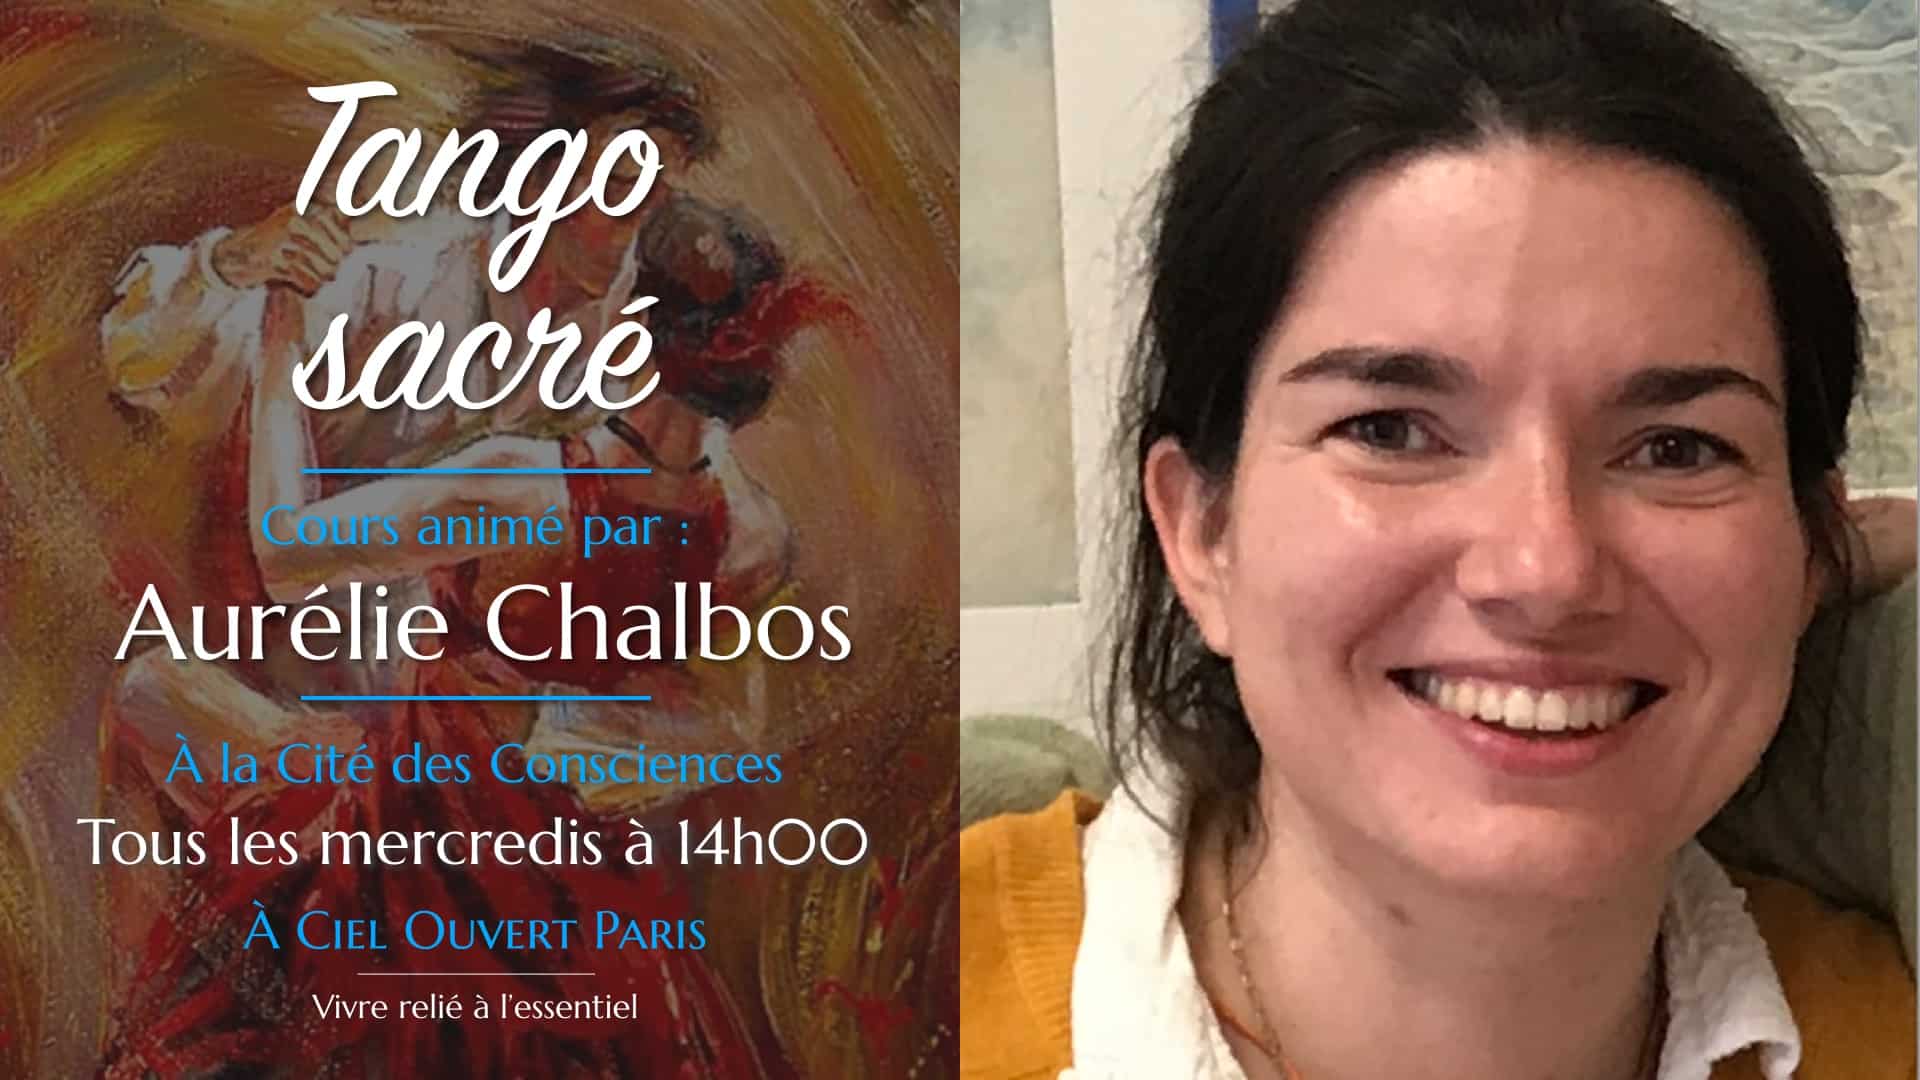 Tango sacré – Aurélie Chalbos